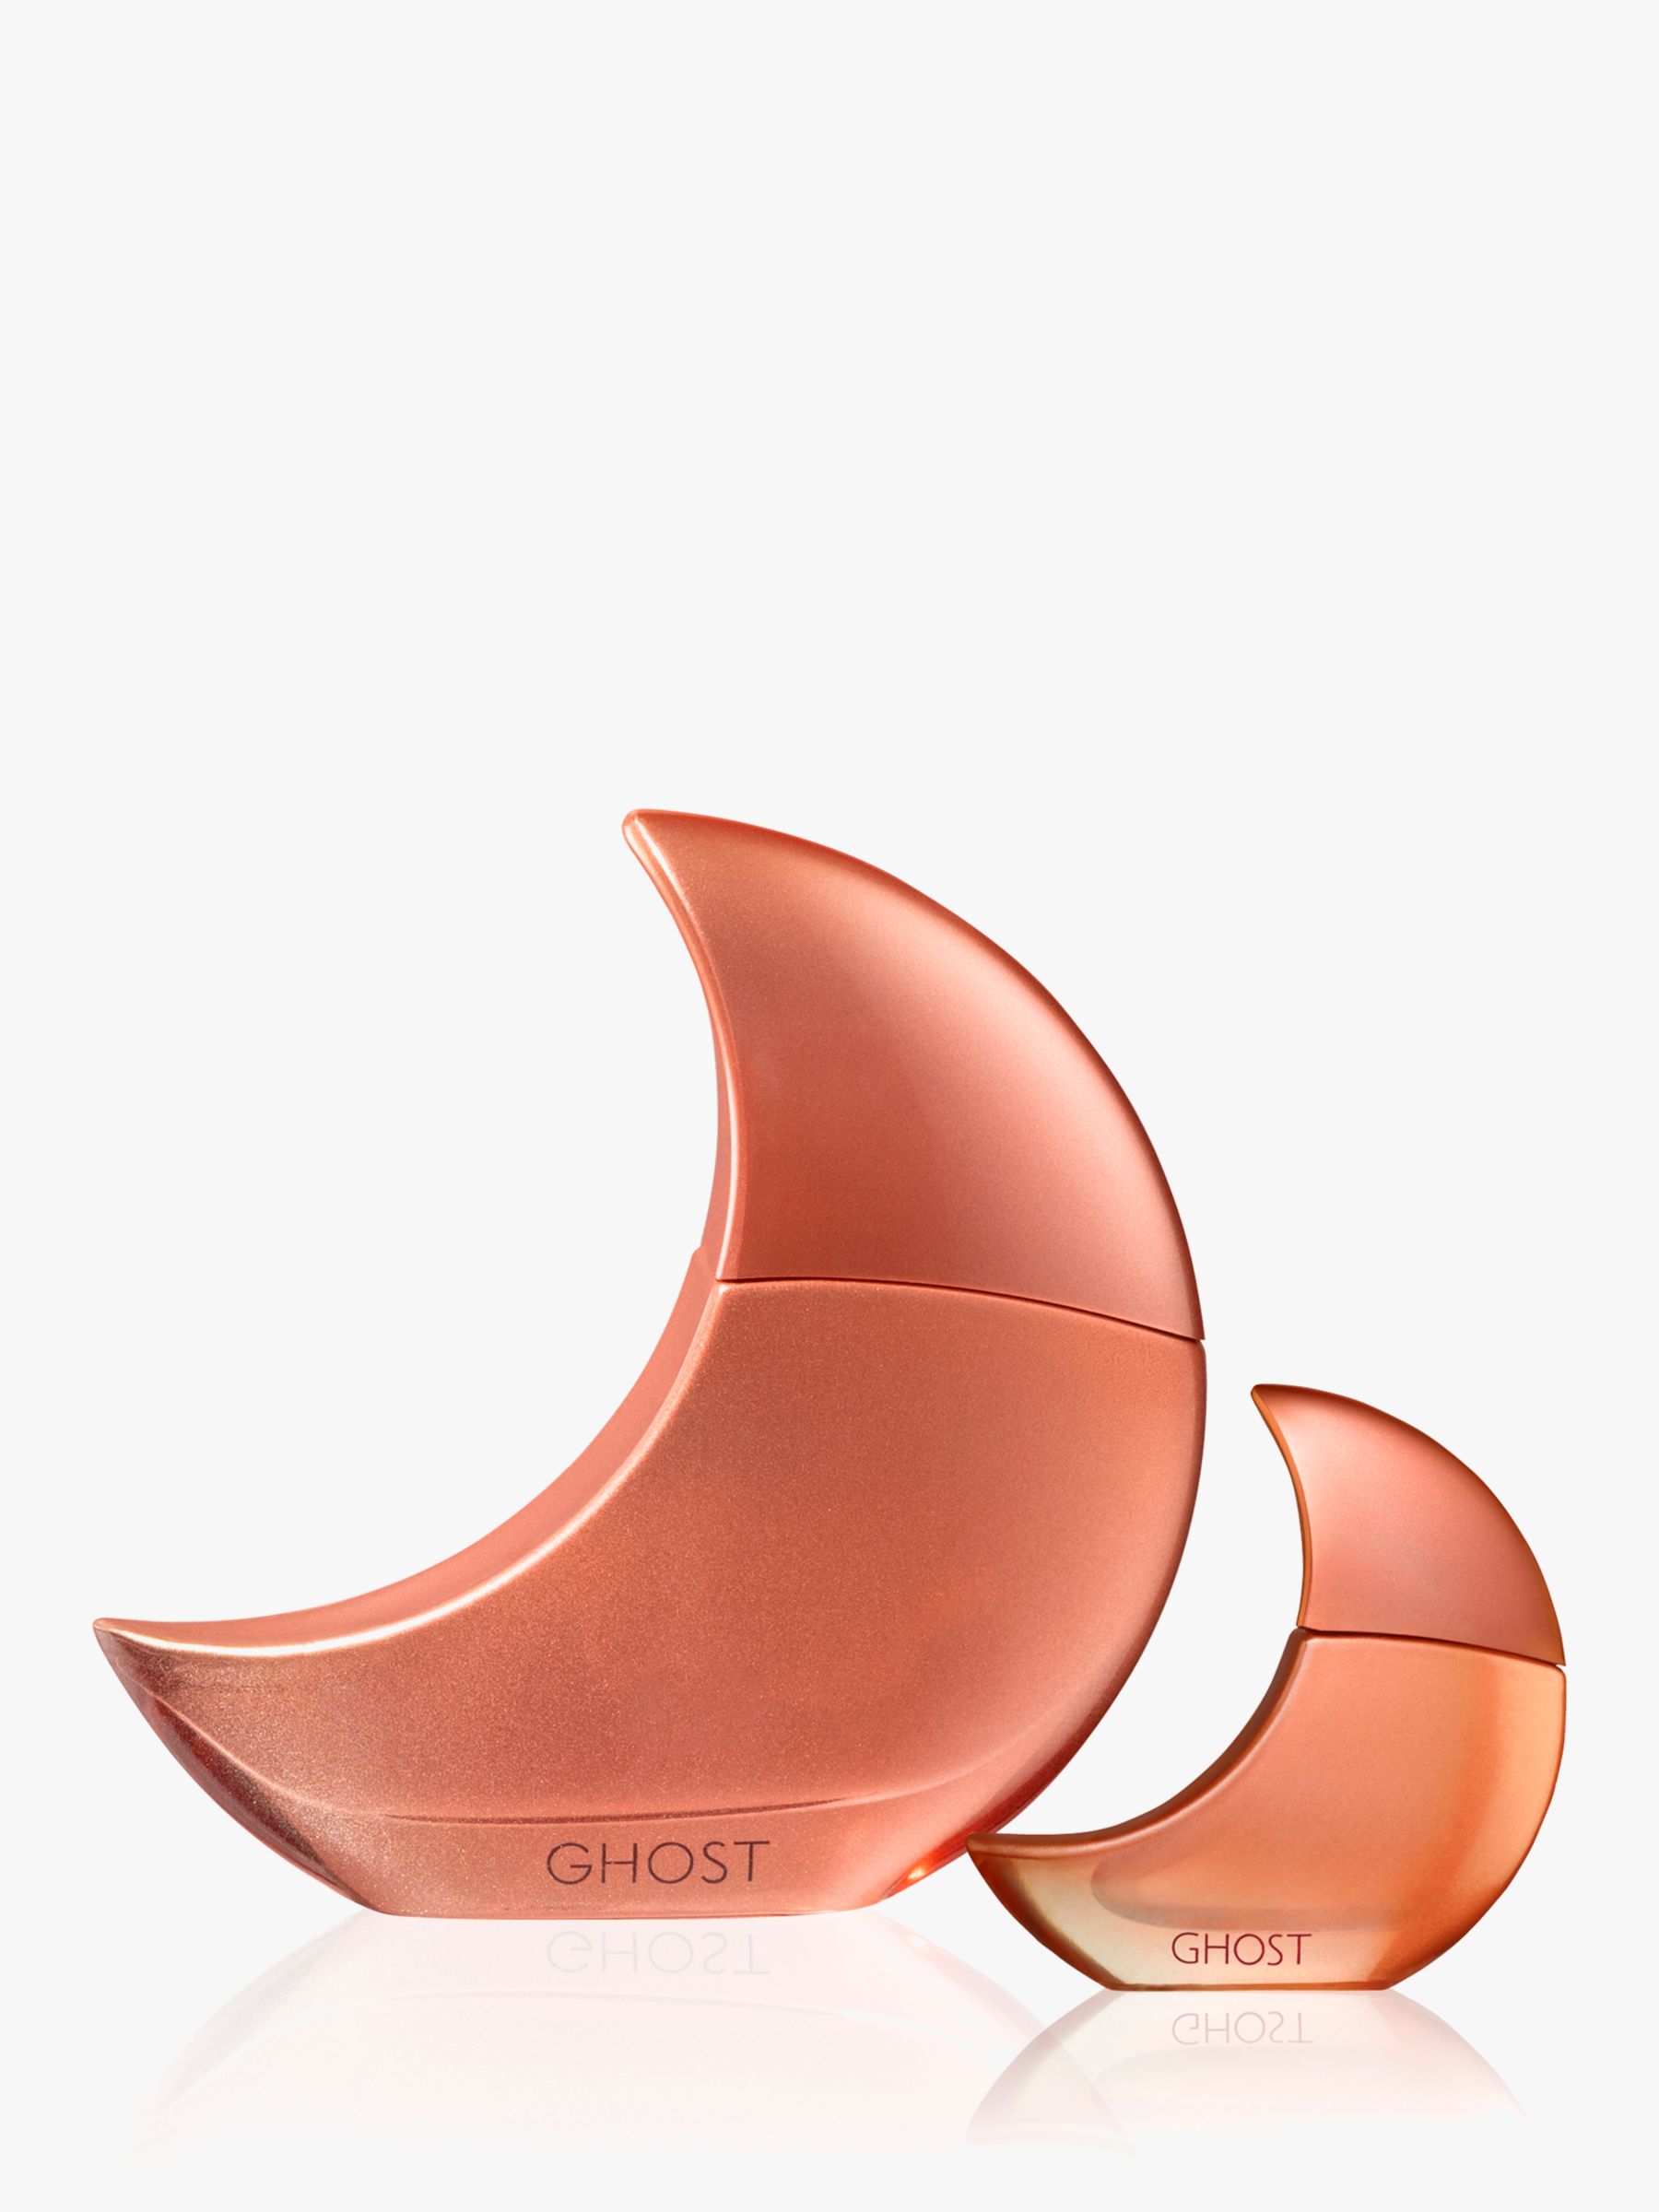 Ghost Orb Of Night Eau de Parfum, 75ml Bundle with Gift